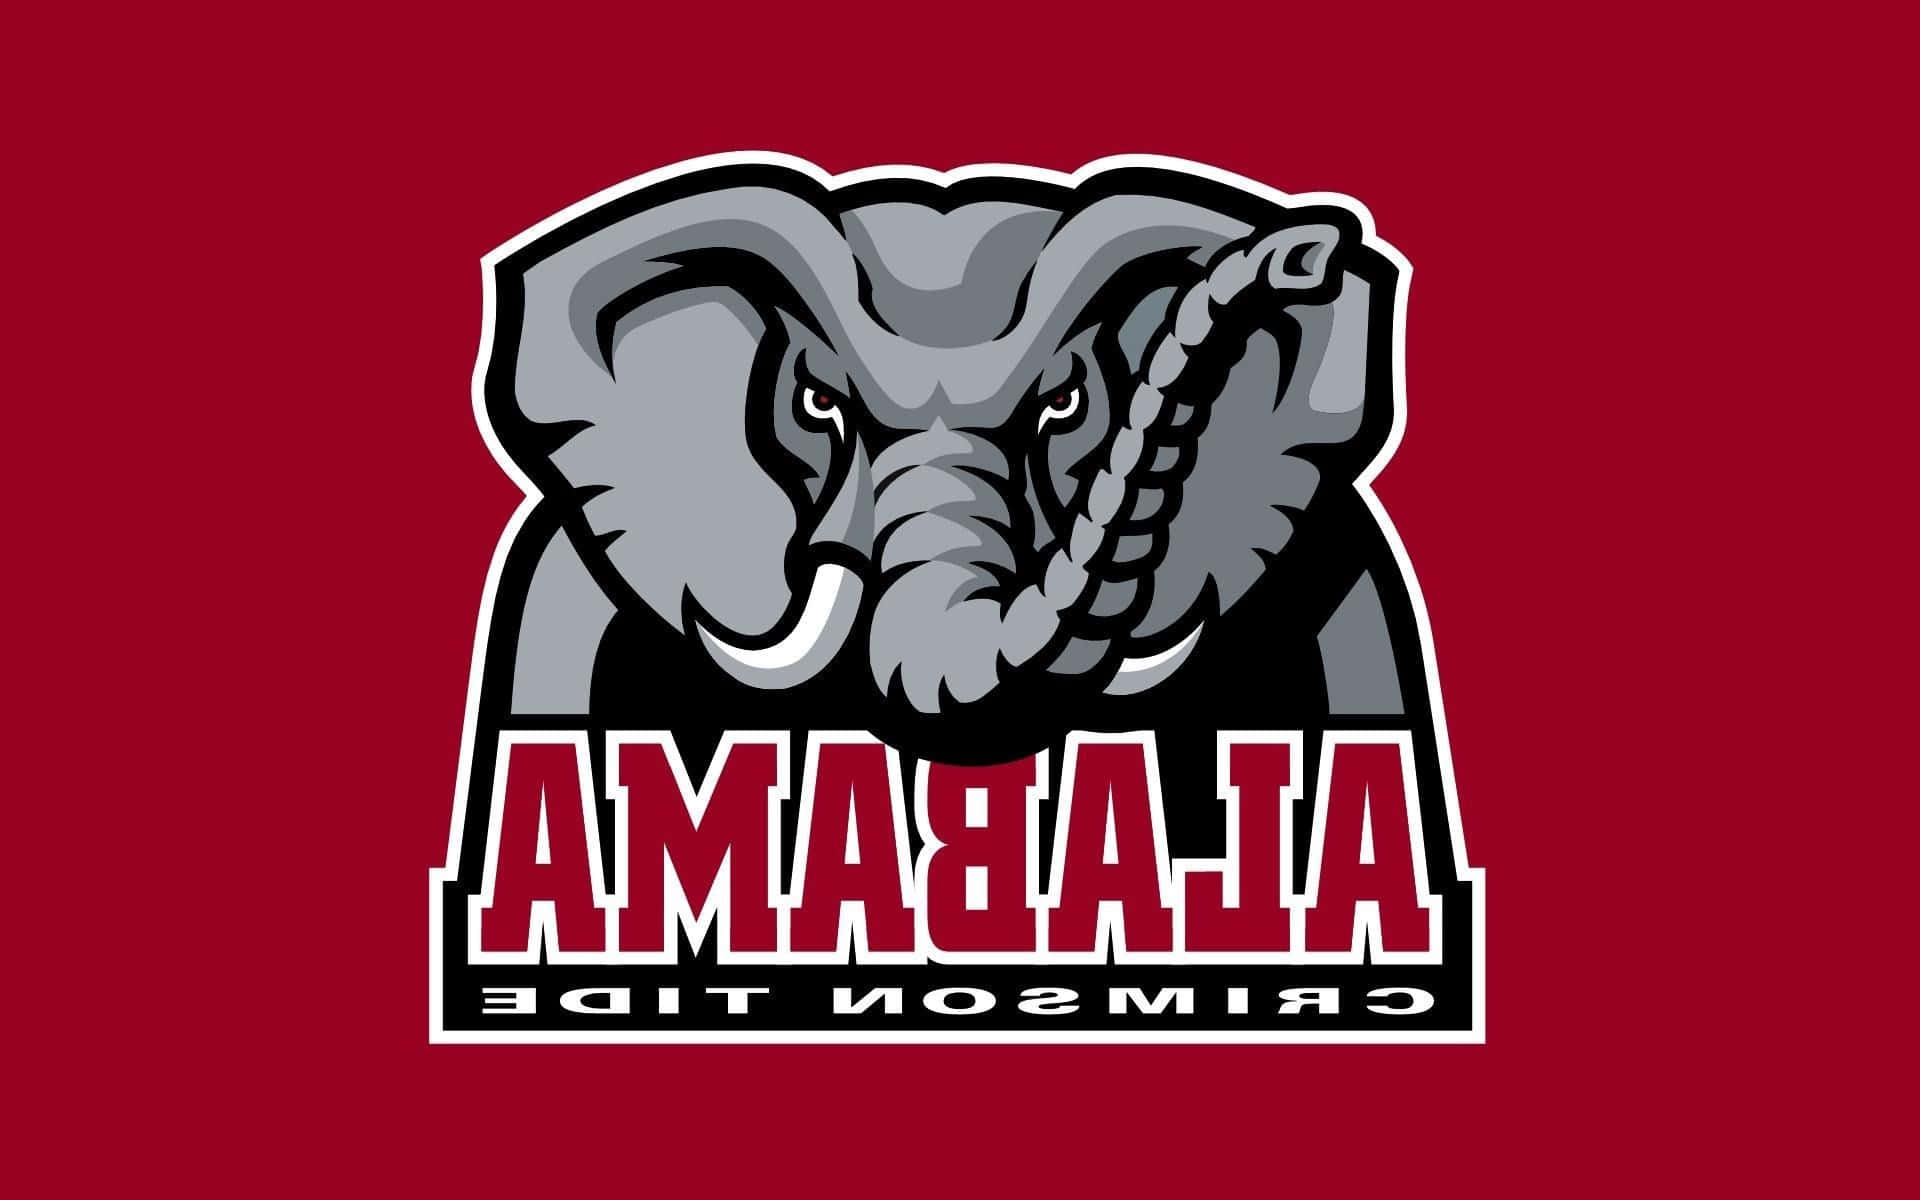 Alabama Crimson Tide Football logo Wallpaper